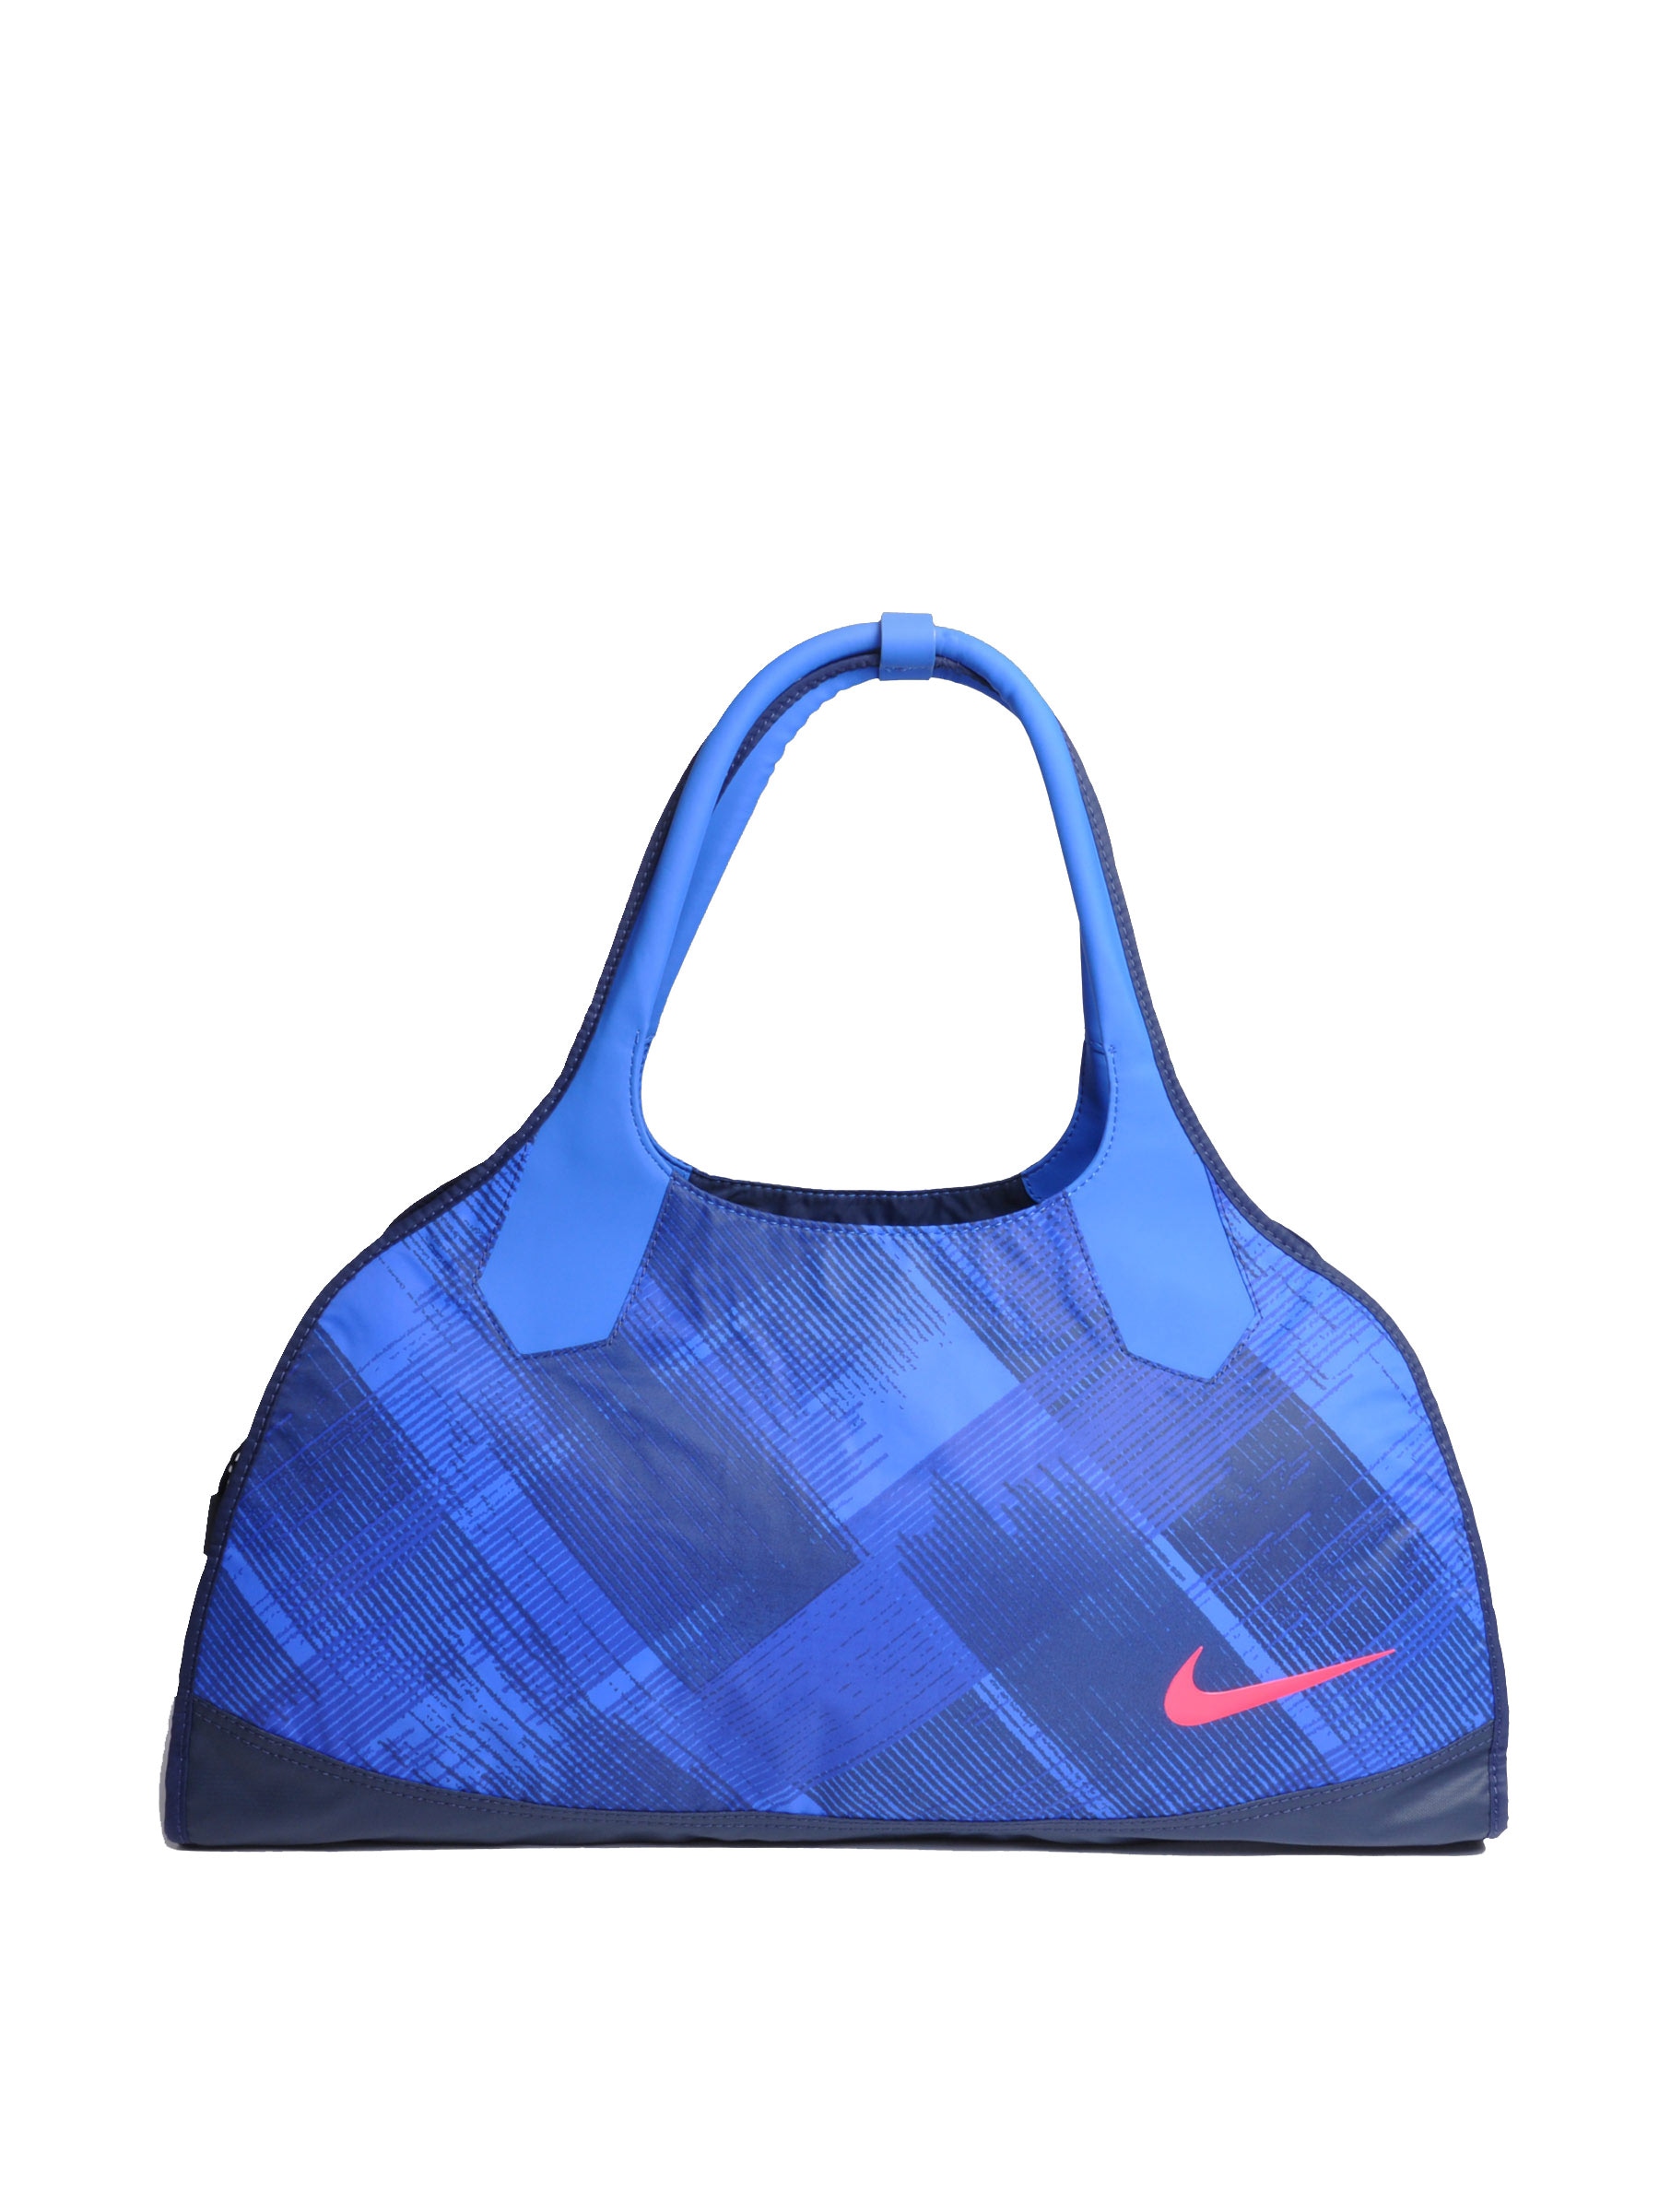 Nike Women Sami Standard Blue Bag